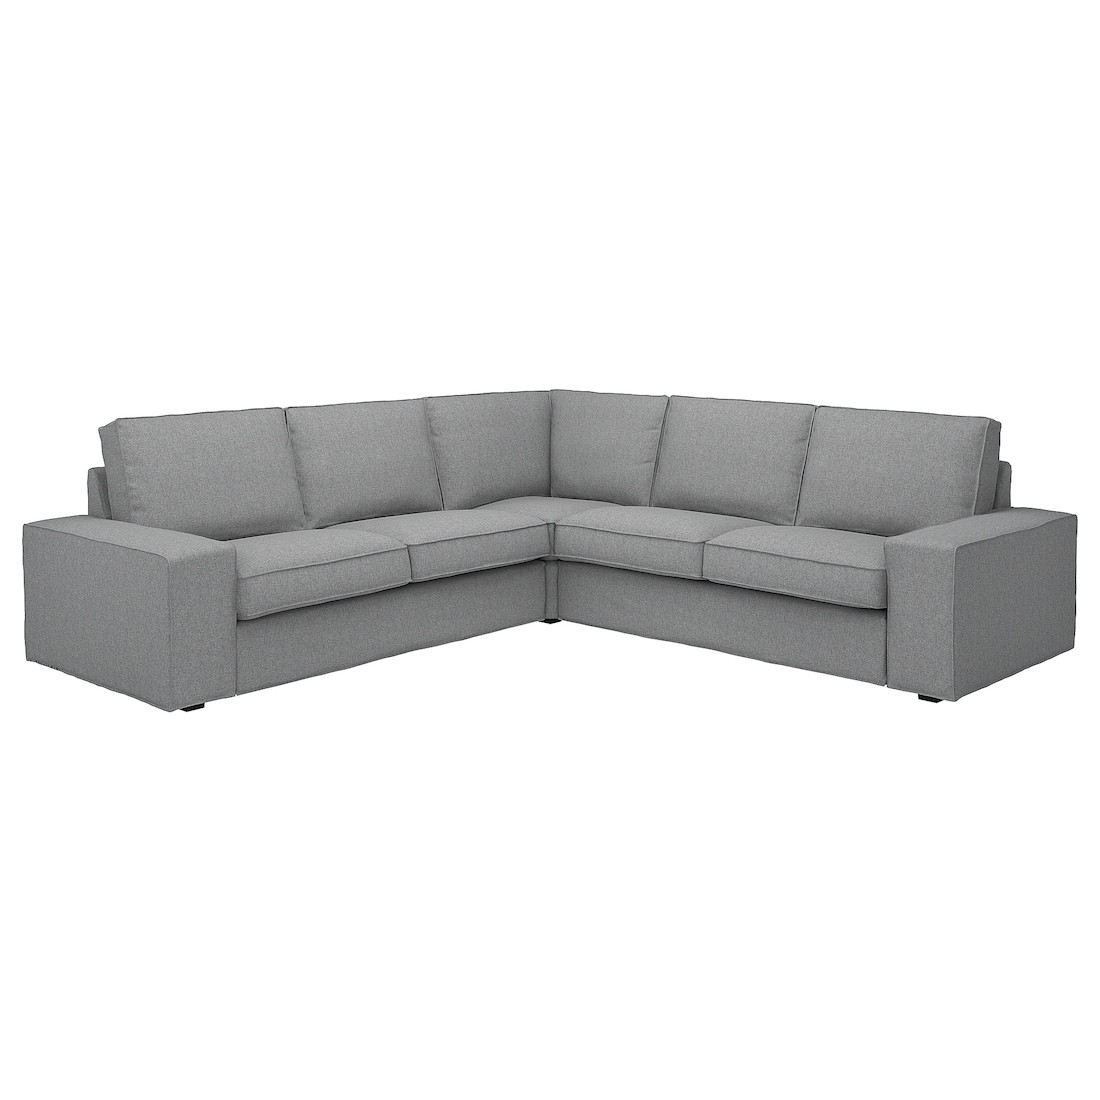 KIVIK КИВИК 4-местный угловой диван, Tibbleby бежевый / серый